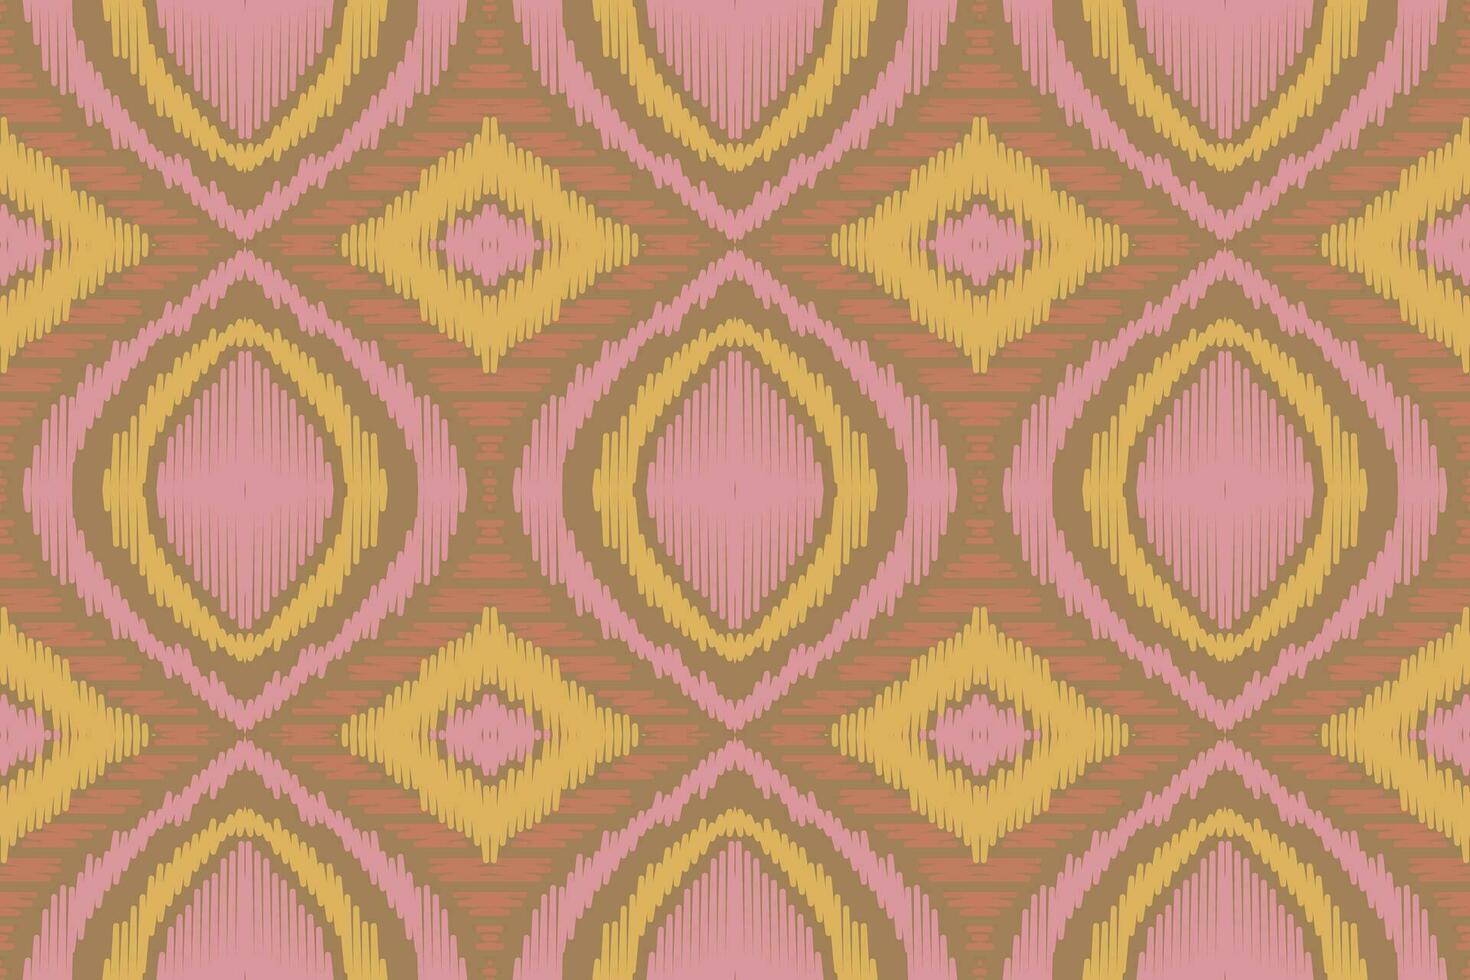 ikat damasco bordado antecedentes. ikat flor geométrico étnico oriental modelo tradicional. ikat azteca estilo resumen diseño para impresión textura,tela,sari,sari,alfombra. vector